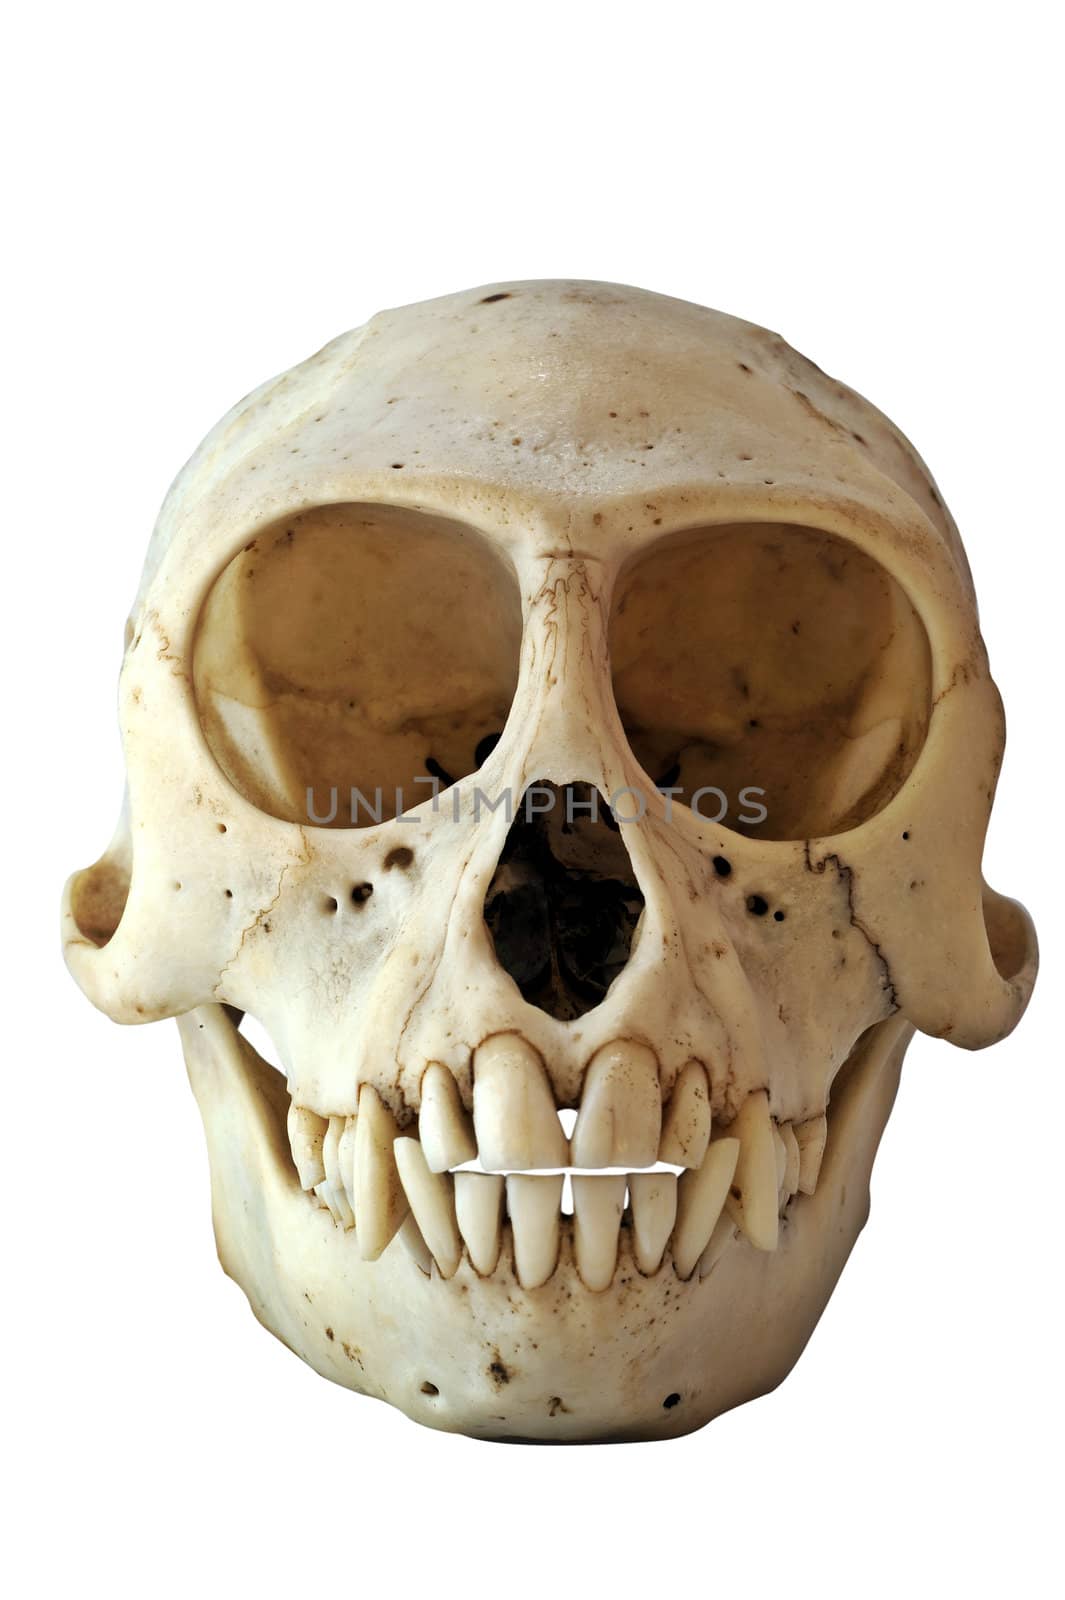 Skull of a Black-Faced Vervet Monkey by Bateleur